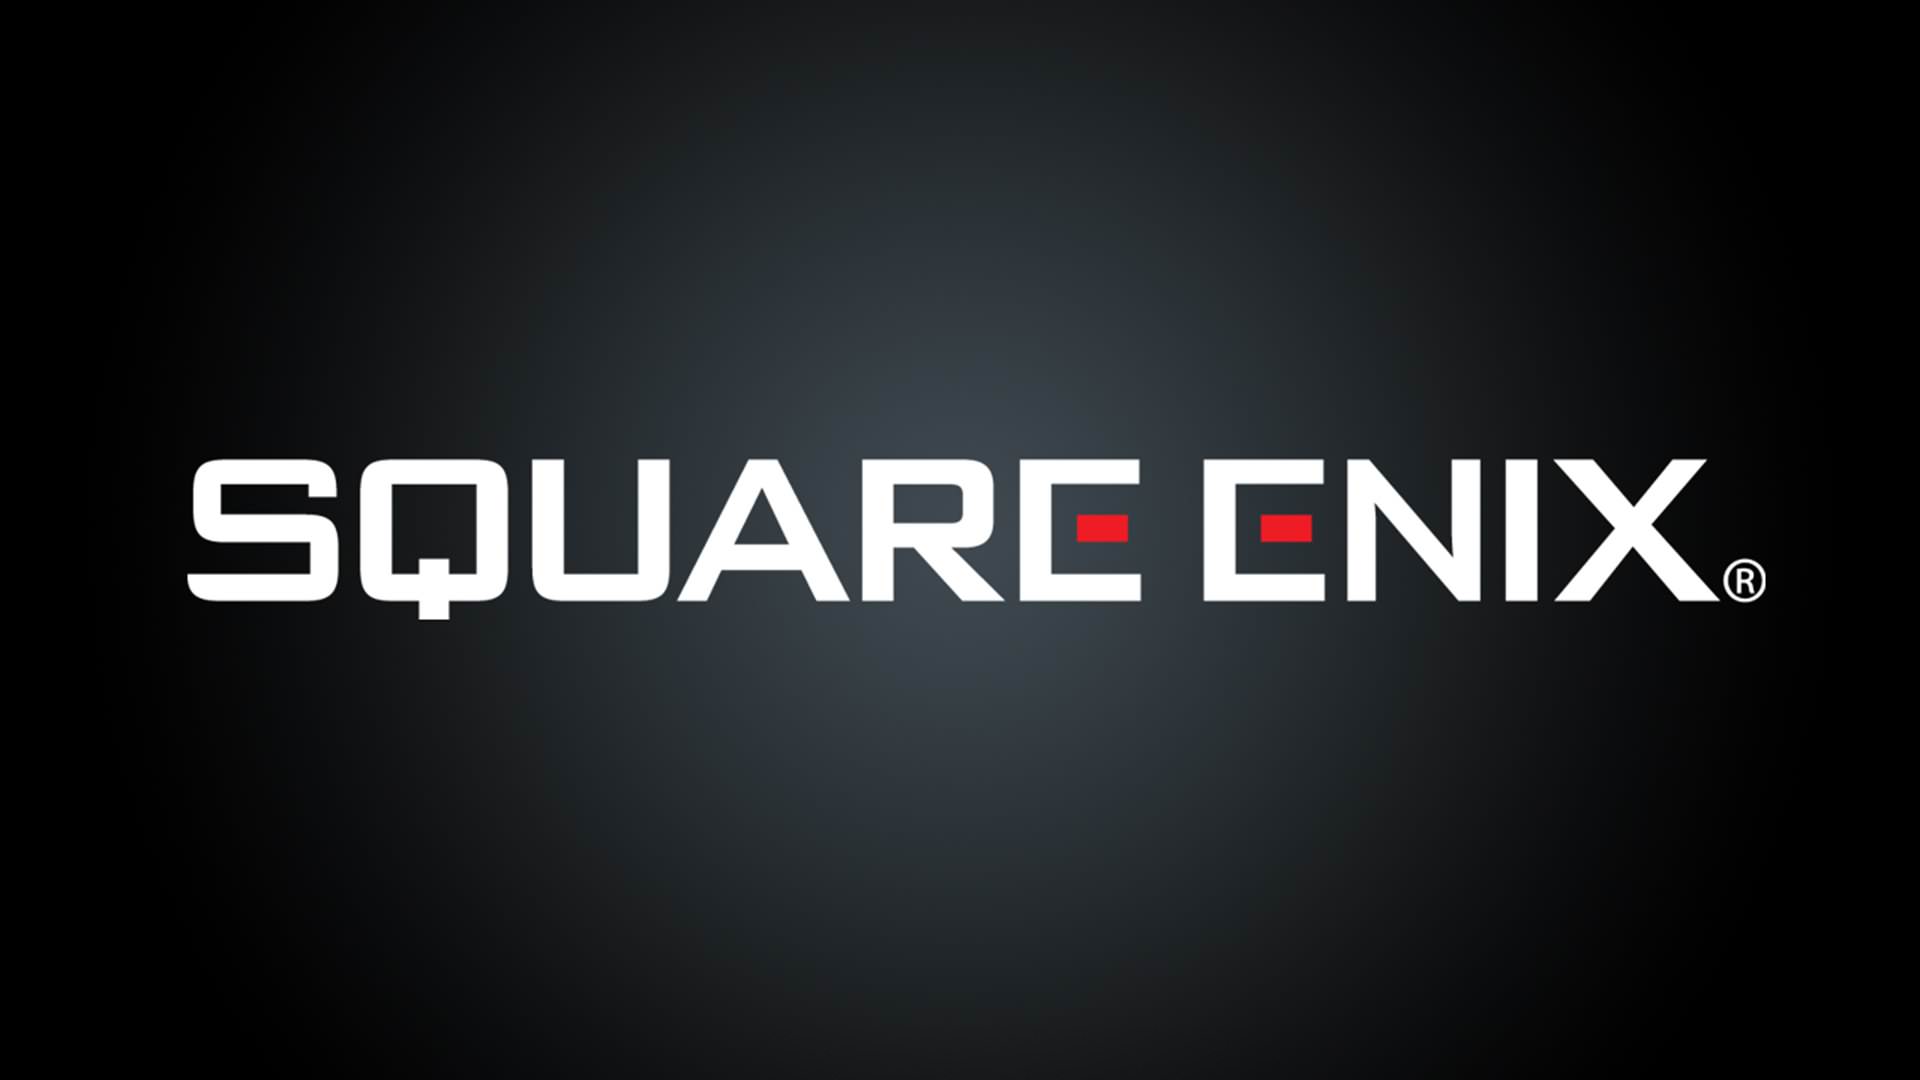 square enix logo  Image of square enix logo